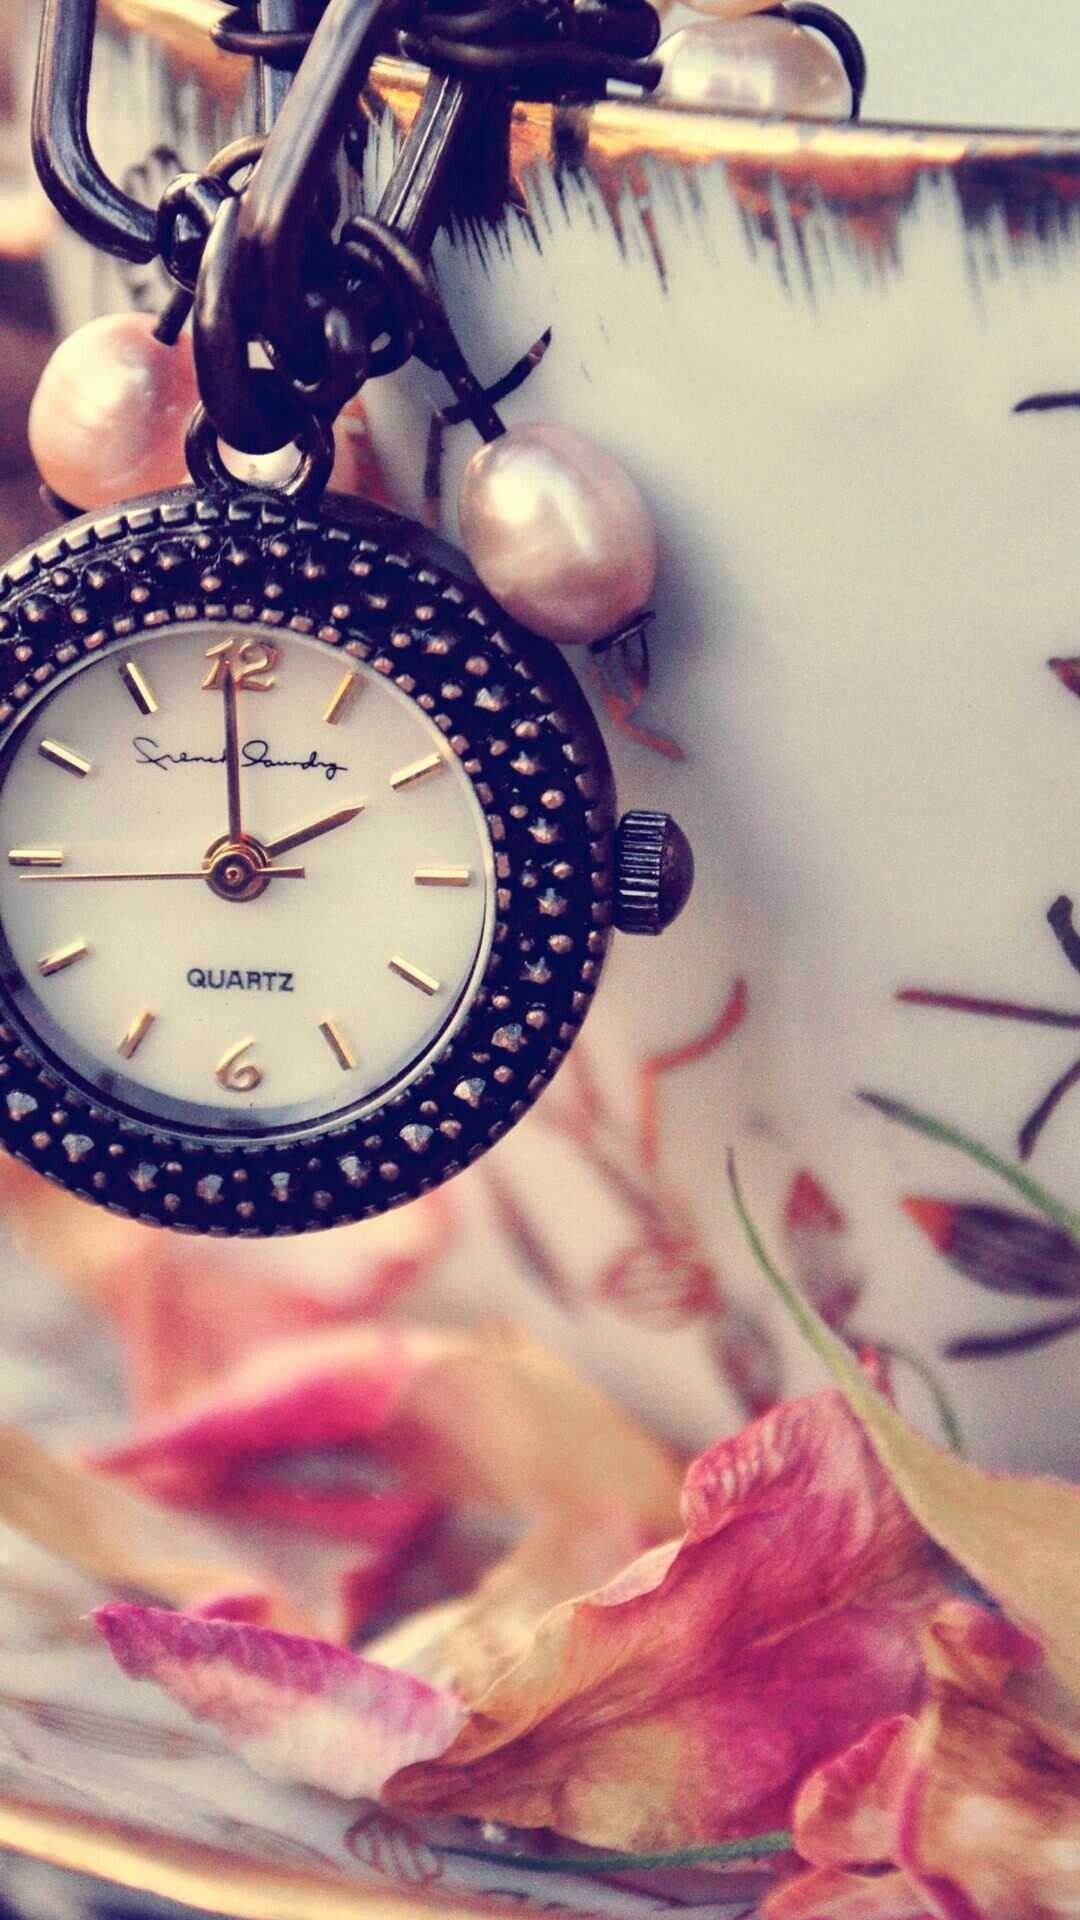 Girly: Vintage quartz clock, Ornament, Dried rose petals. 1080x1920 Full HD Background.